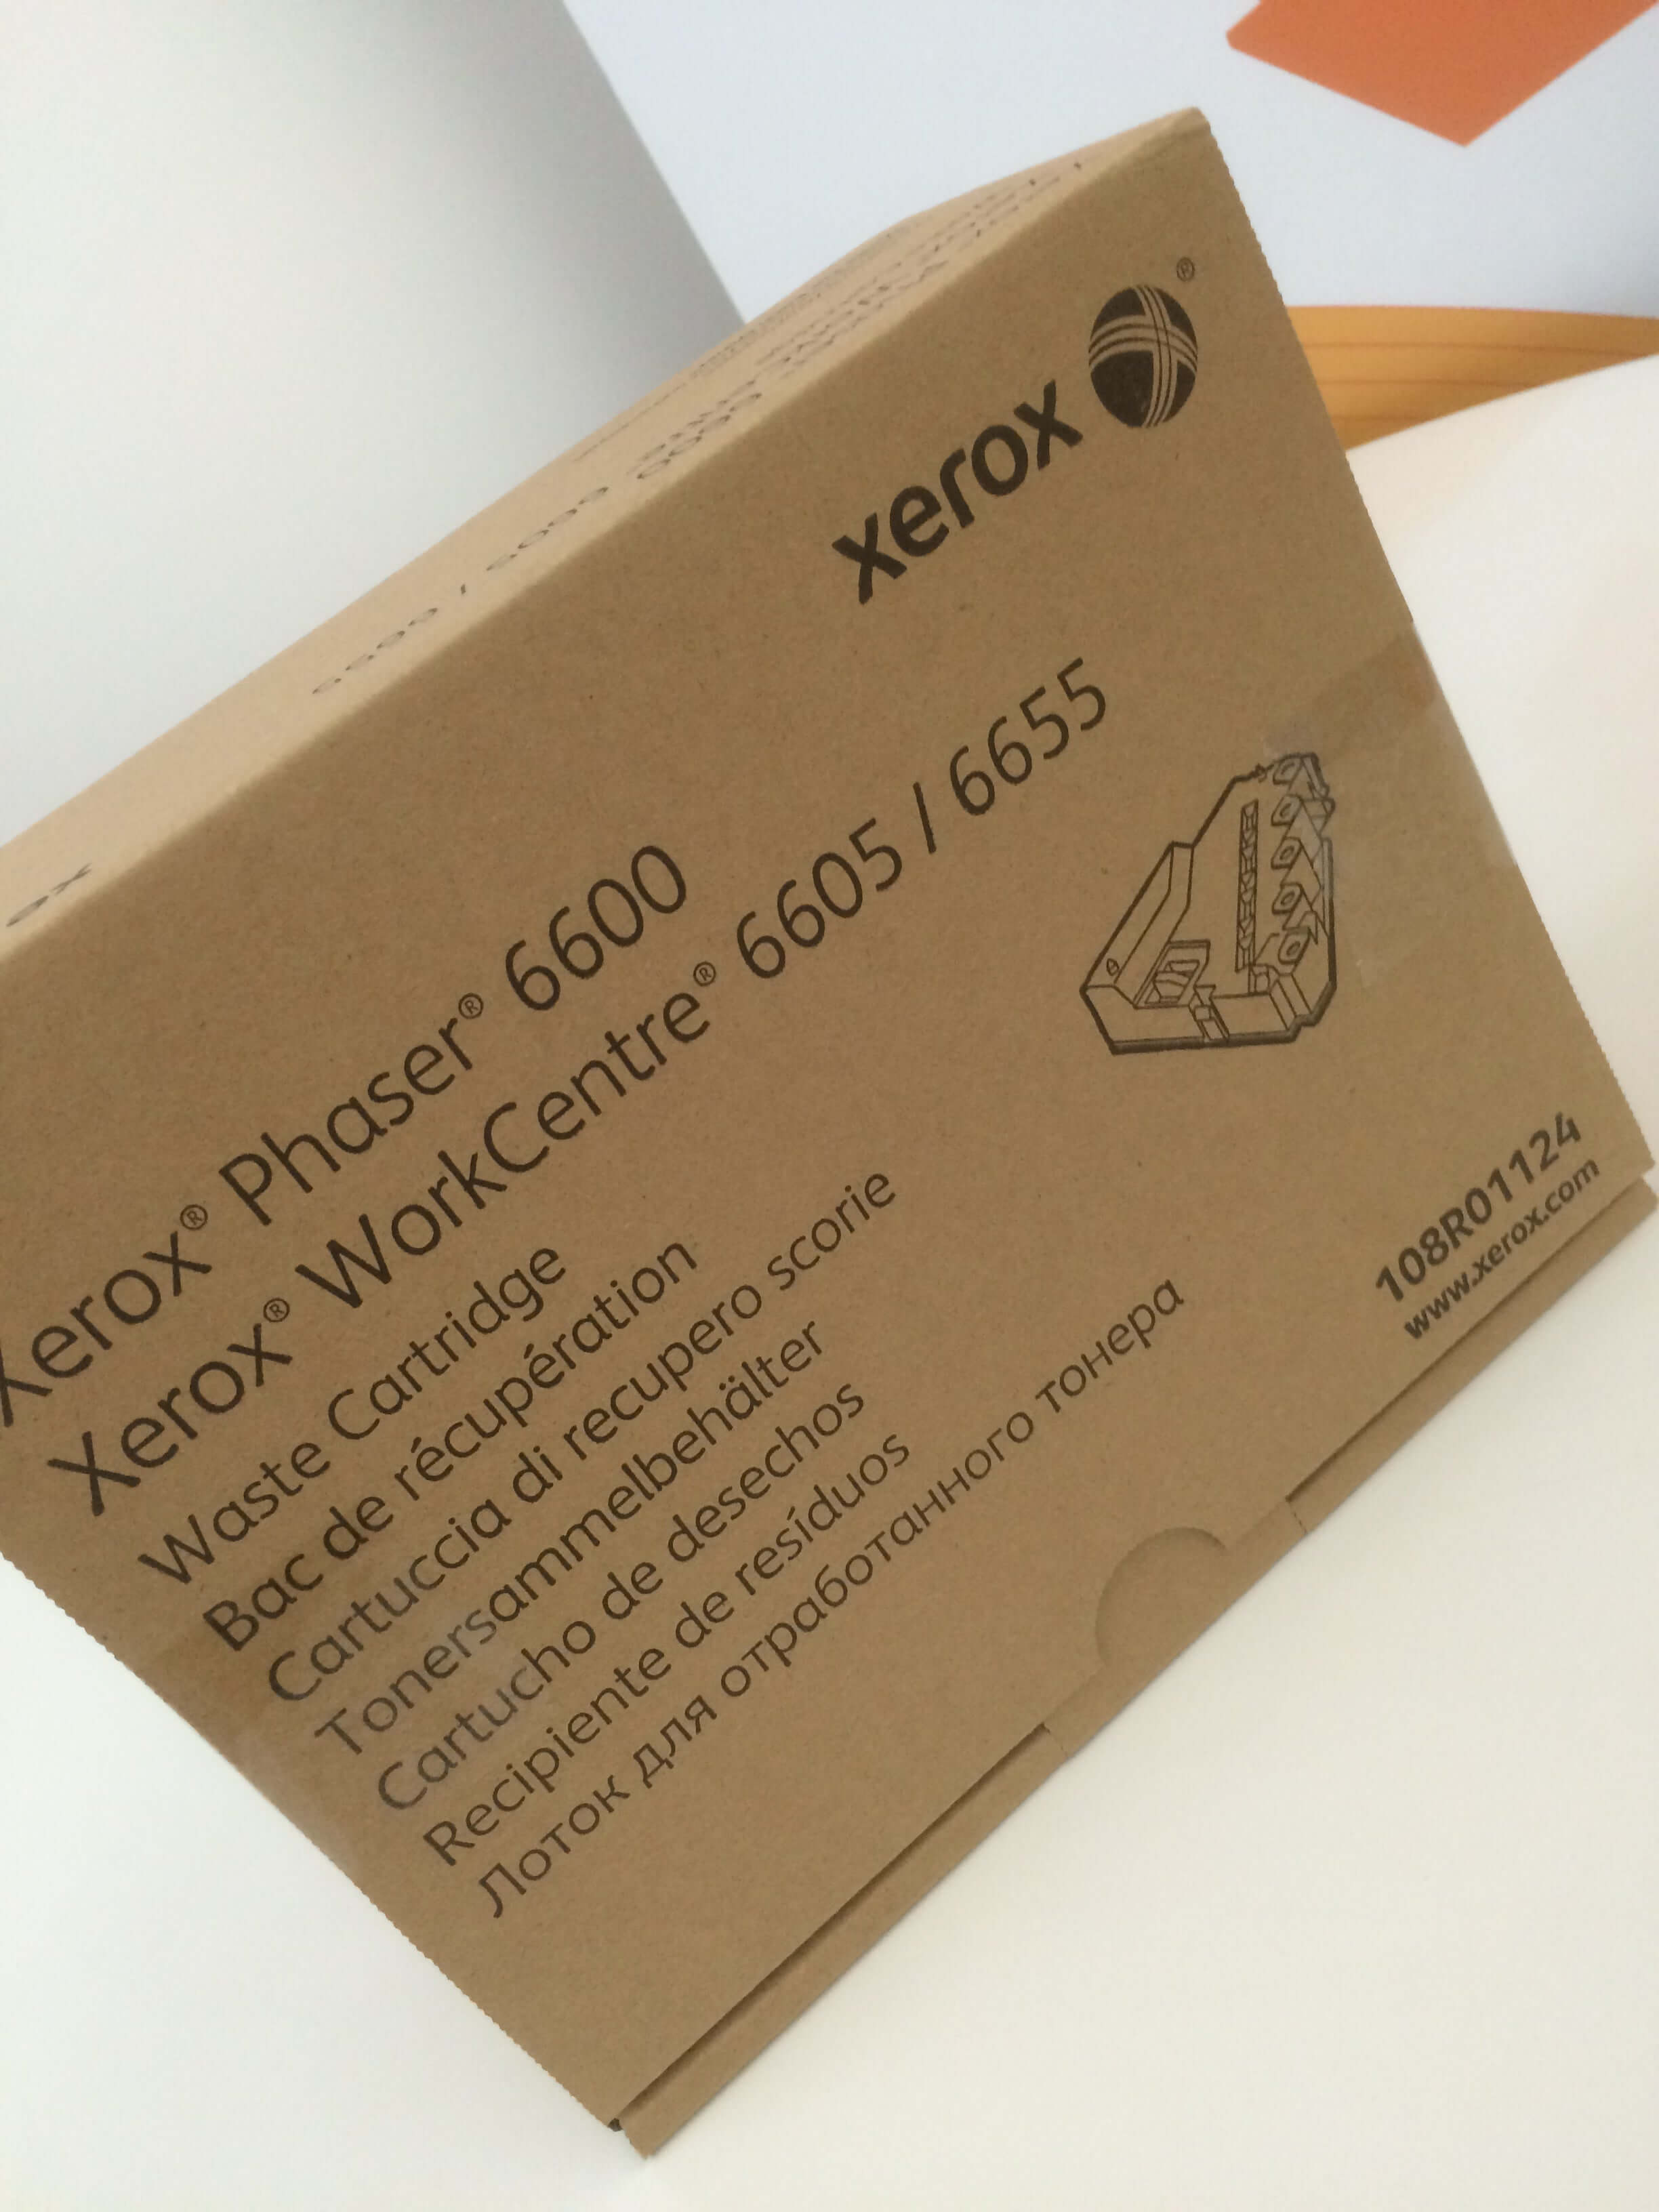 Xerox 108R01124 Waste Toner Cartridge - fits VersaLink C405 / Phaser 6600 / WorkCentre 6605 / 6655 / 6655i